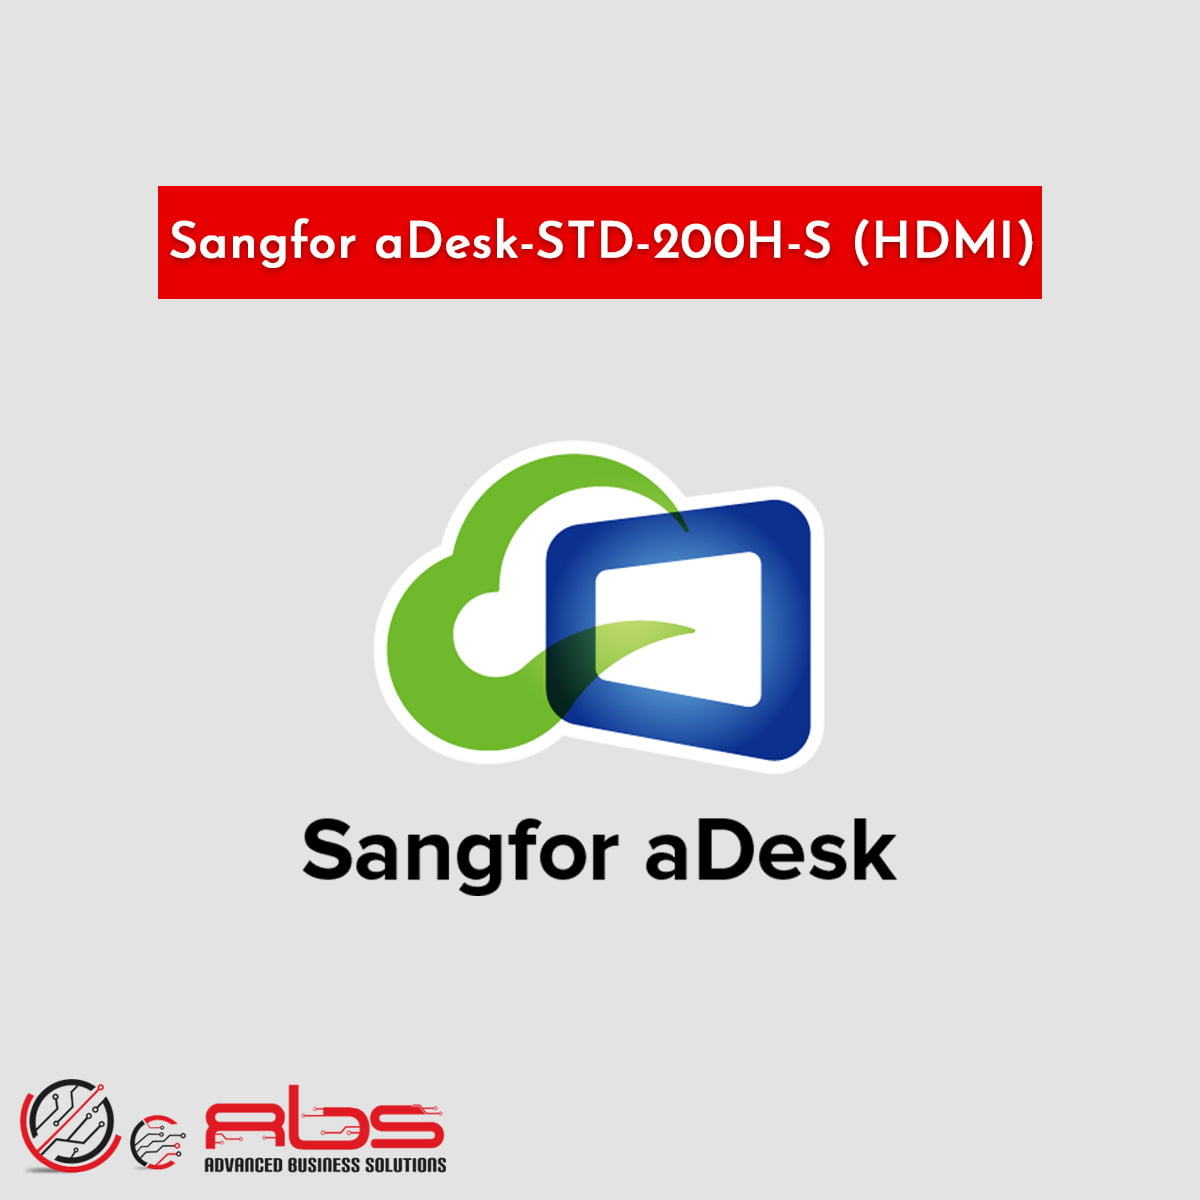 Sangfor aDesk-STD-200H-S (HDMI)